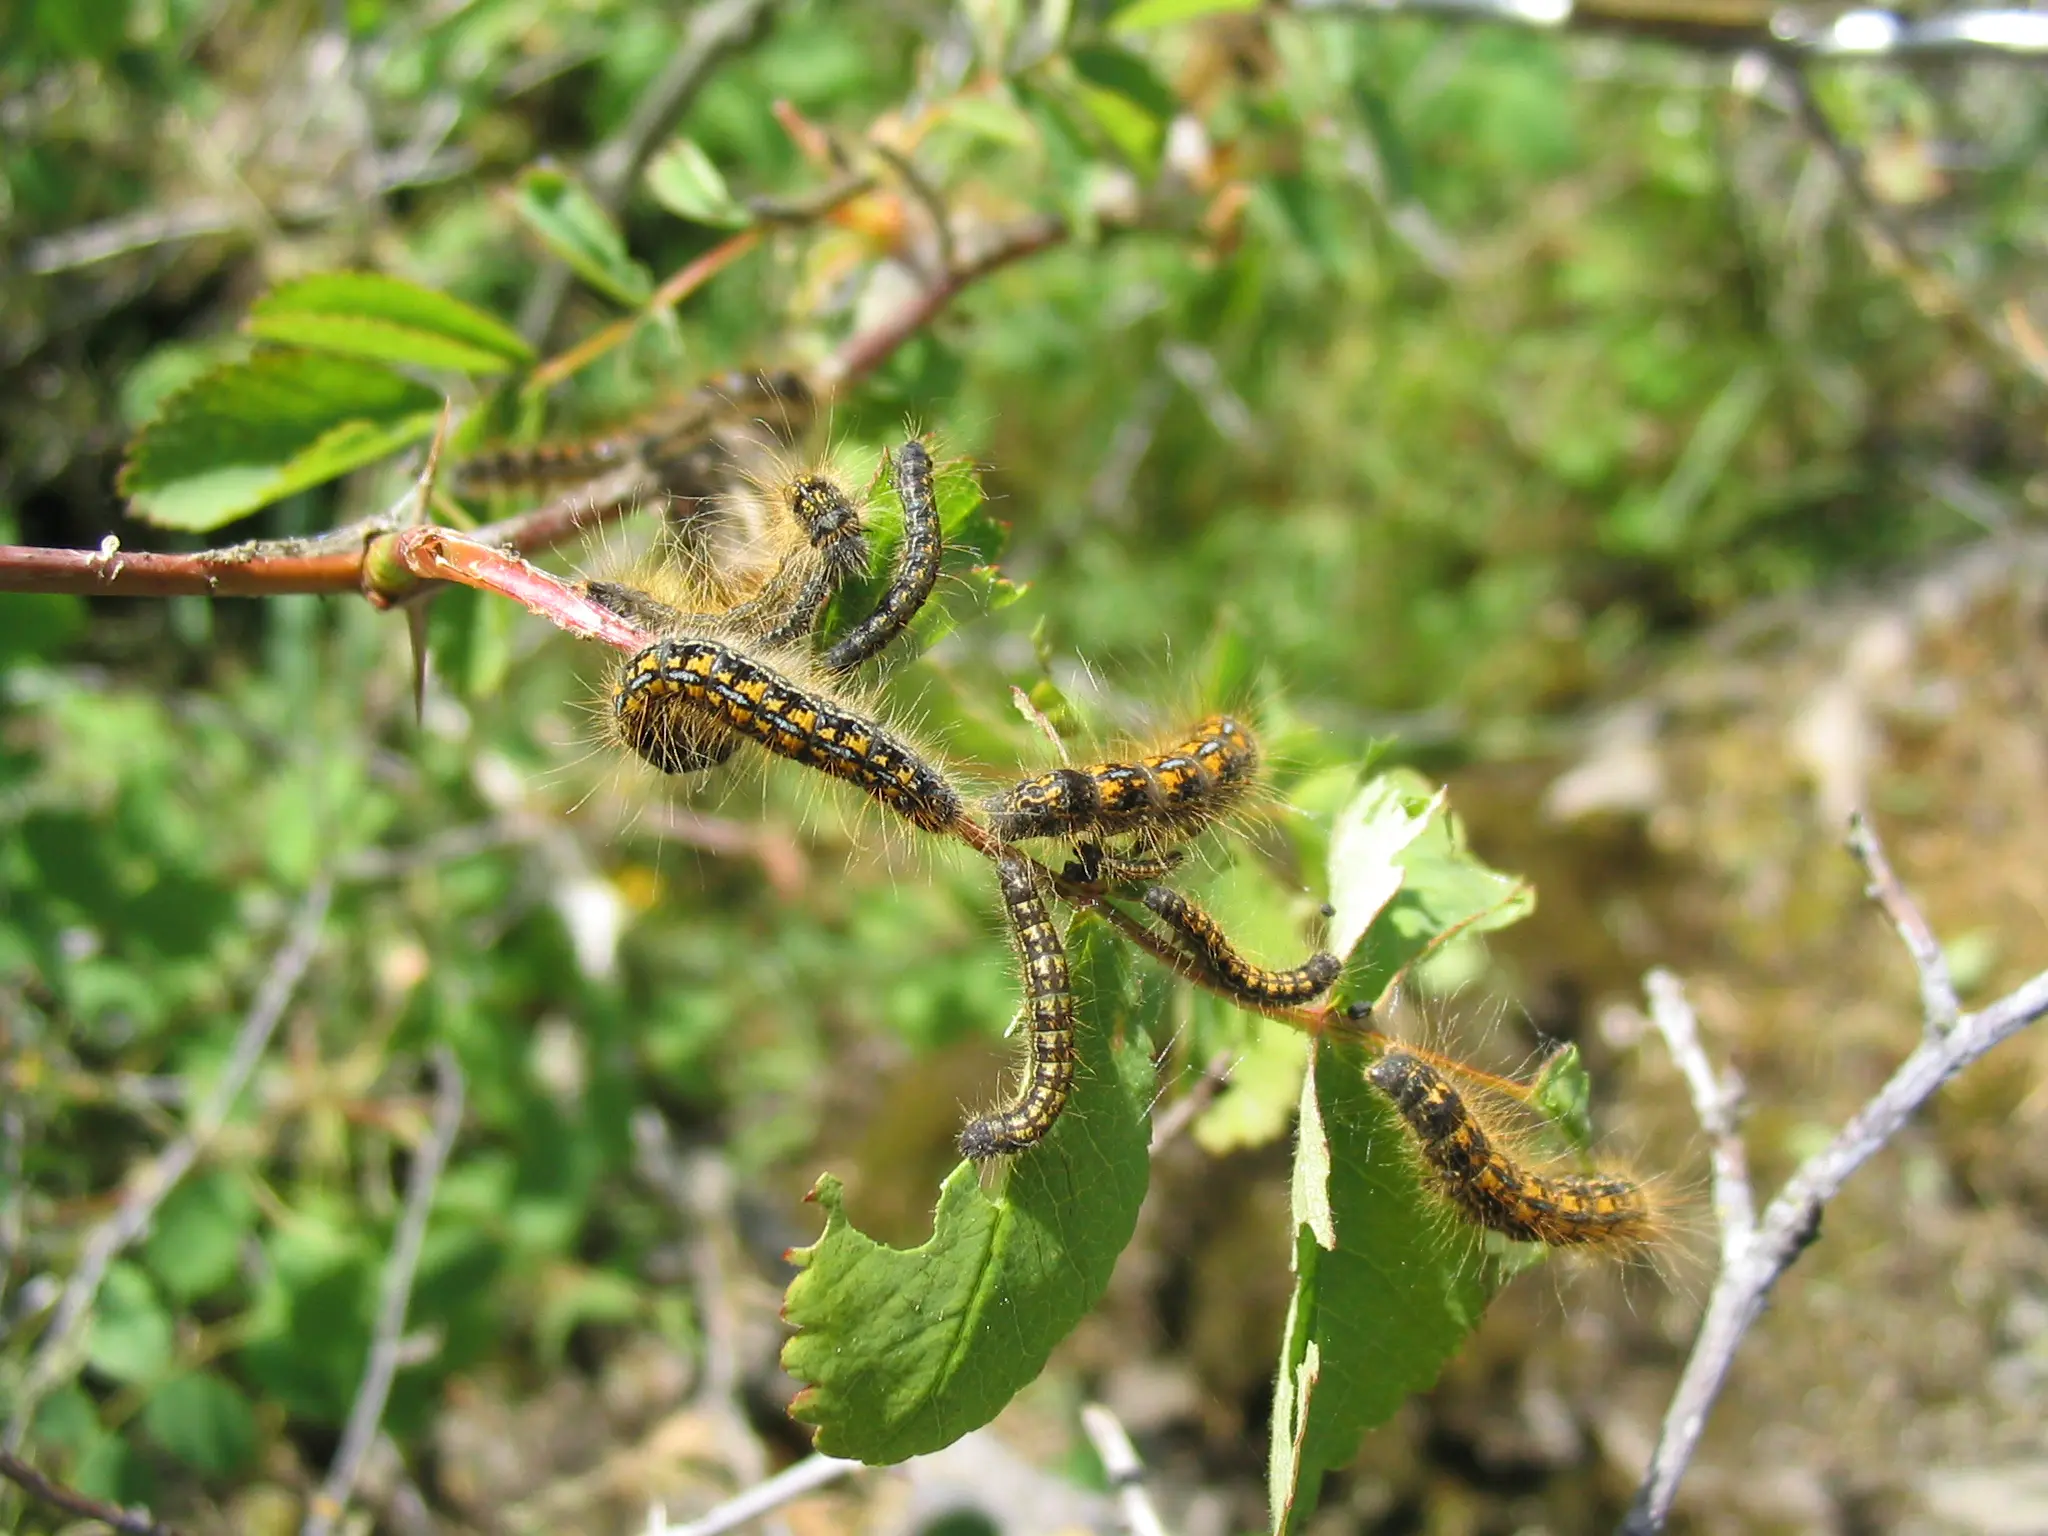 Caterpillars on a branch